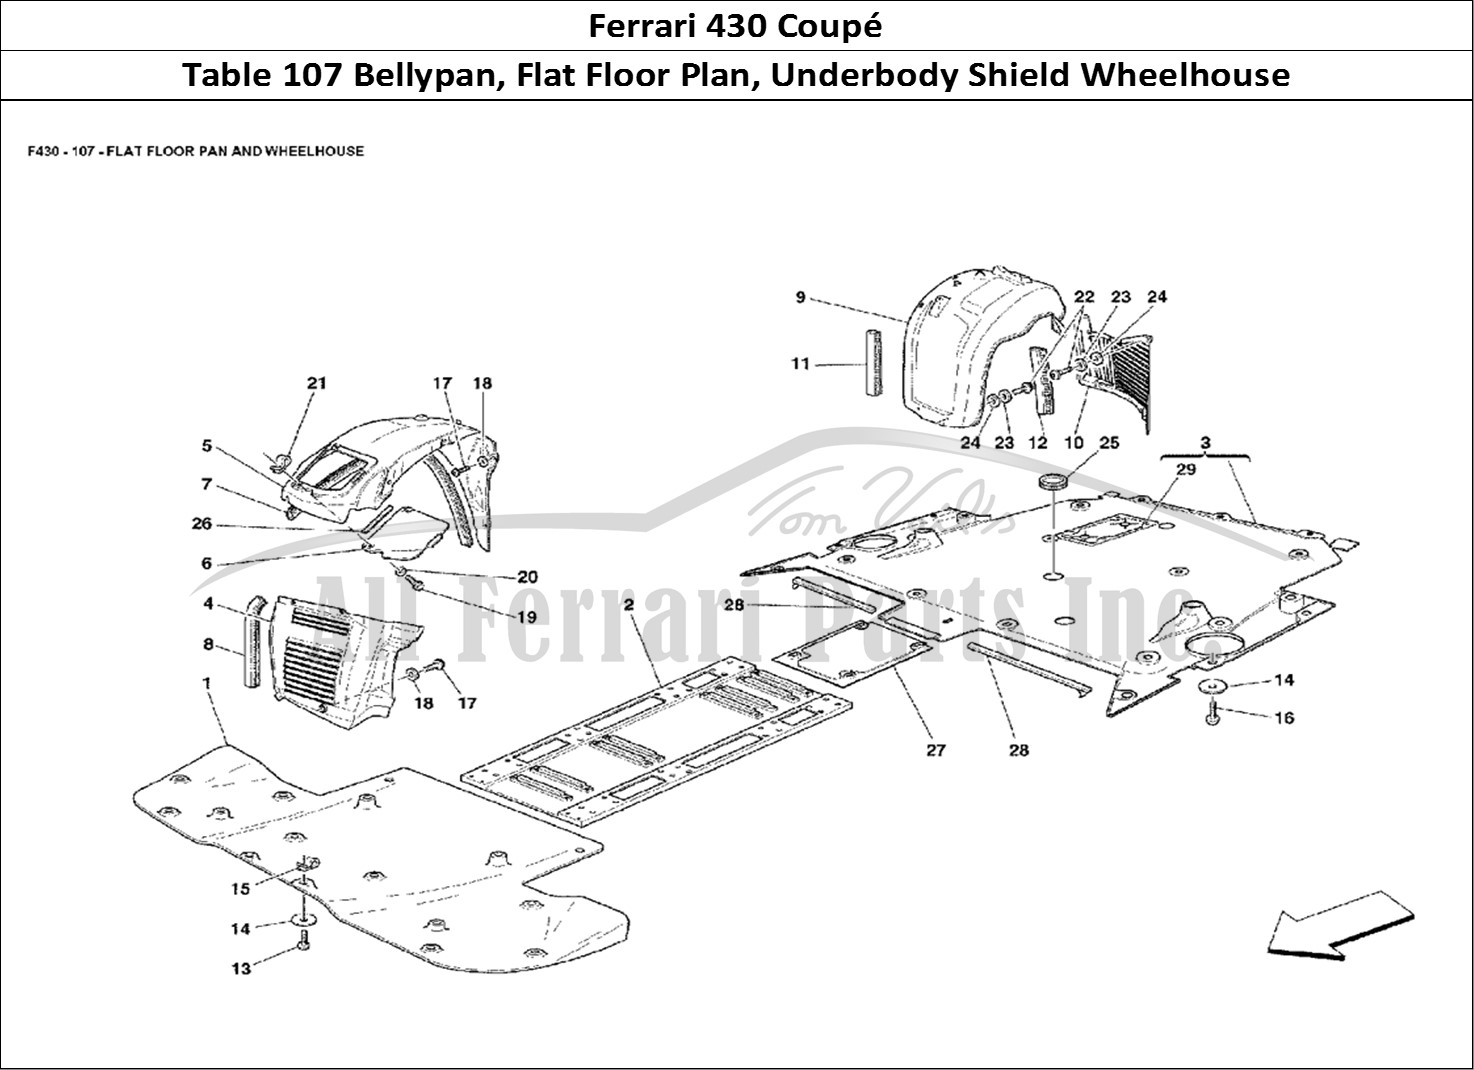 Ferrari Parts Ferrari 430 Coup Page 107 Flat Floor Pan and Wheelh